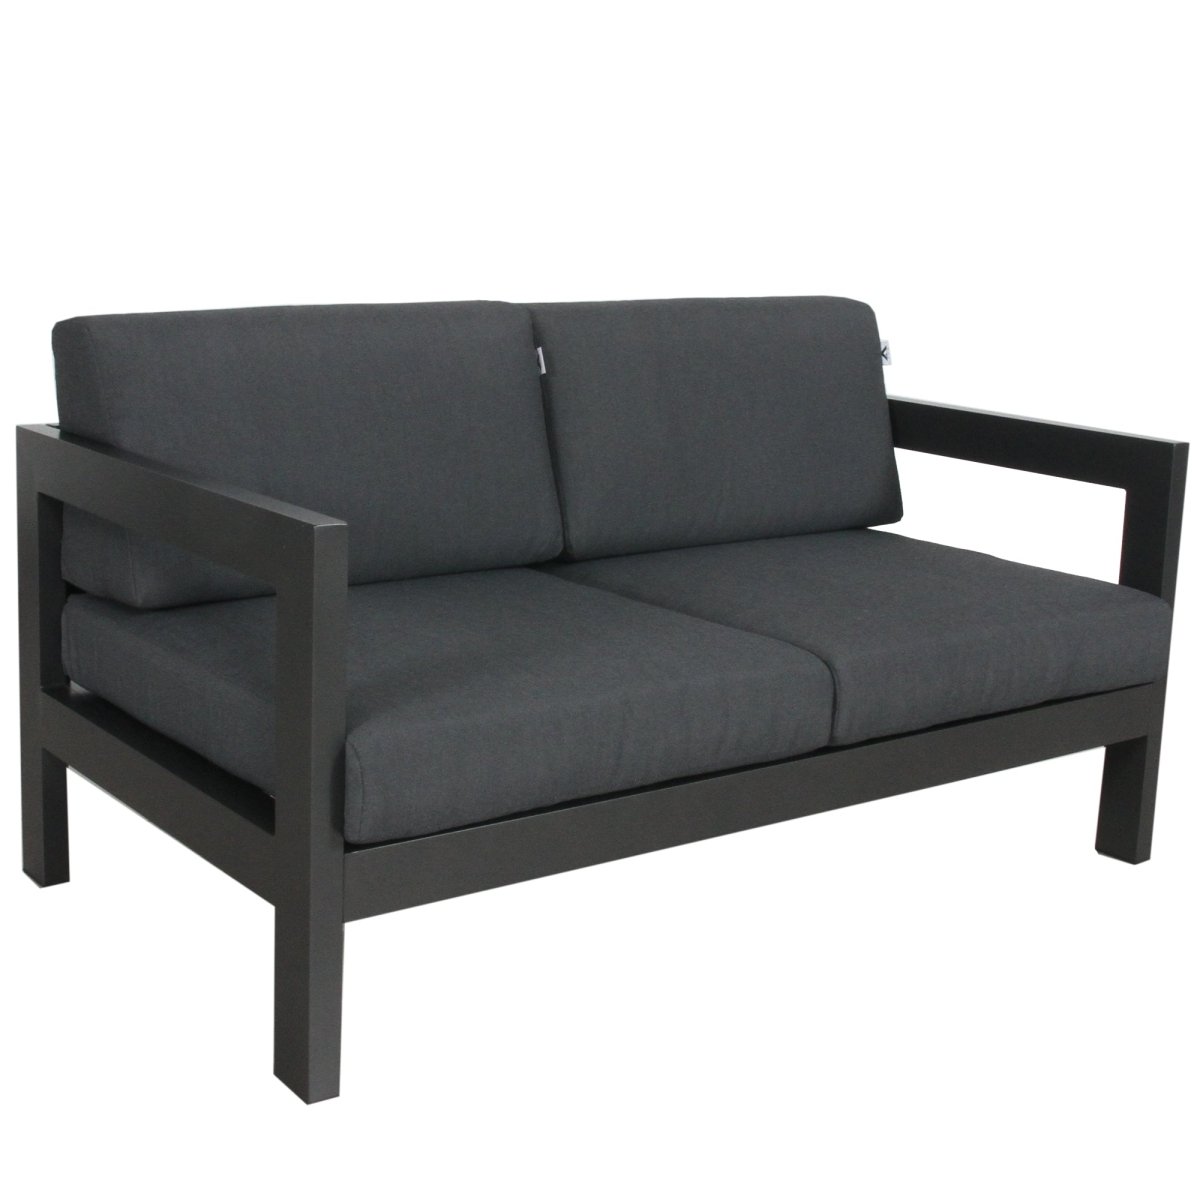 Outie 2 Seater Outdoor Sofa Lounge Aluminium Frame Charcoal - Outdoorium